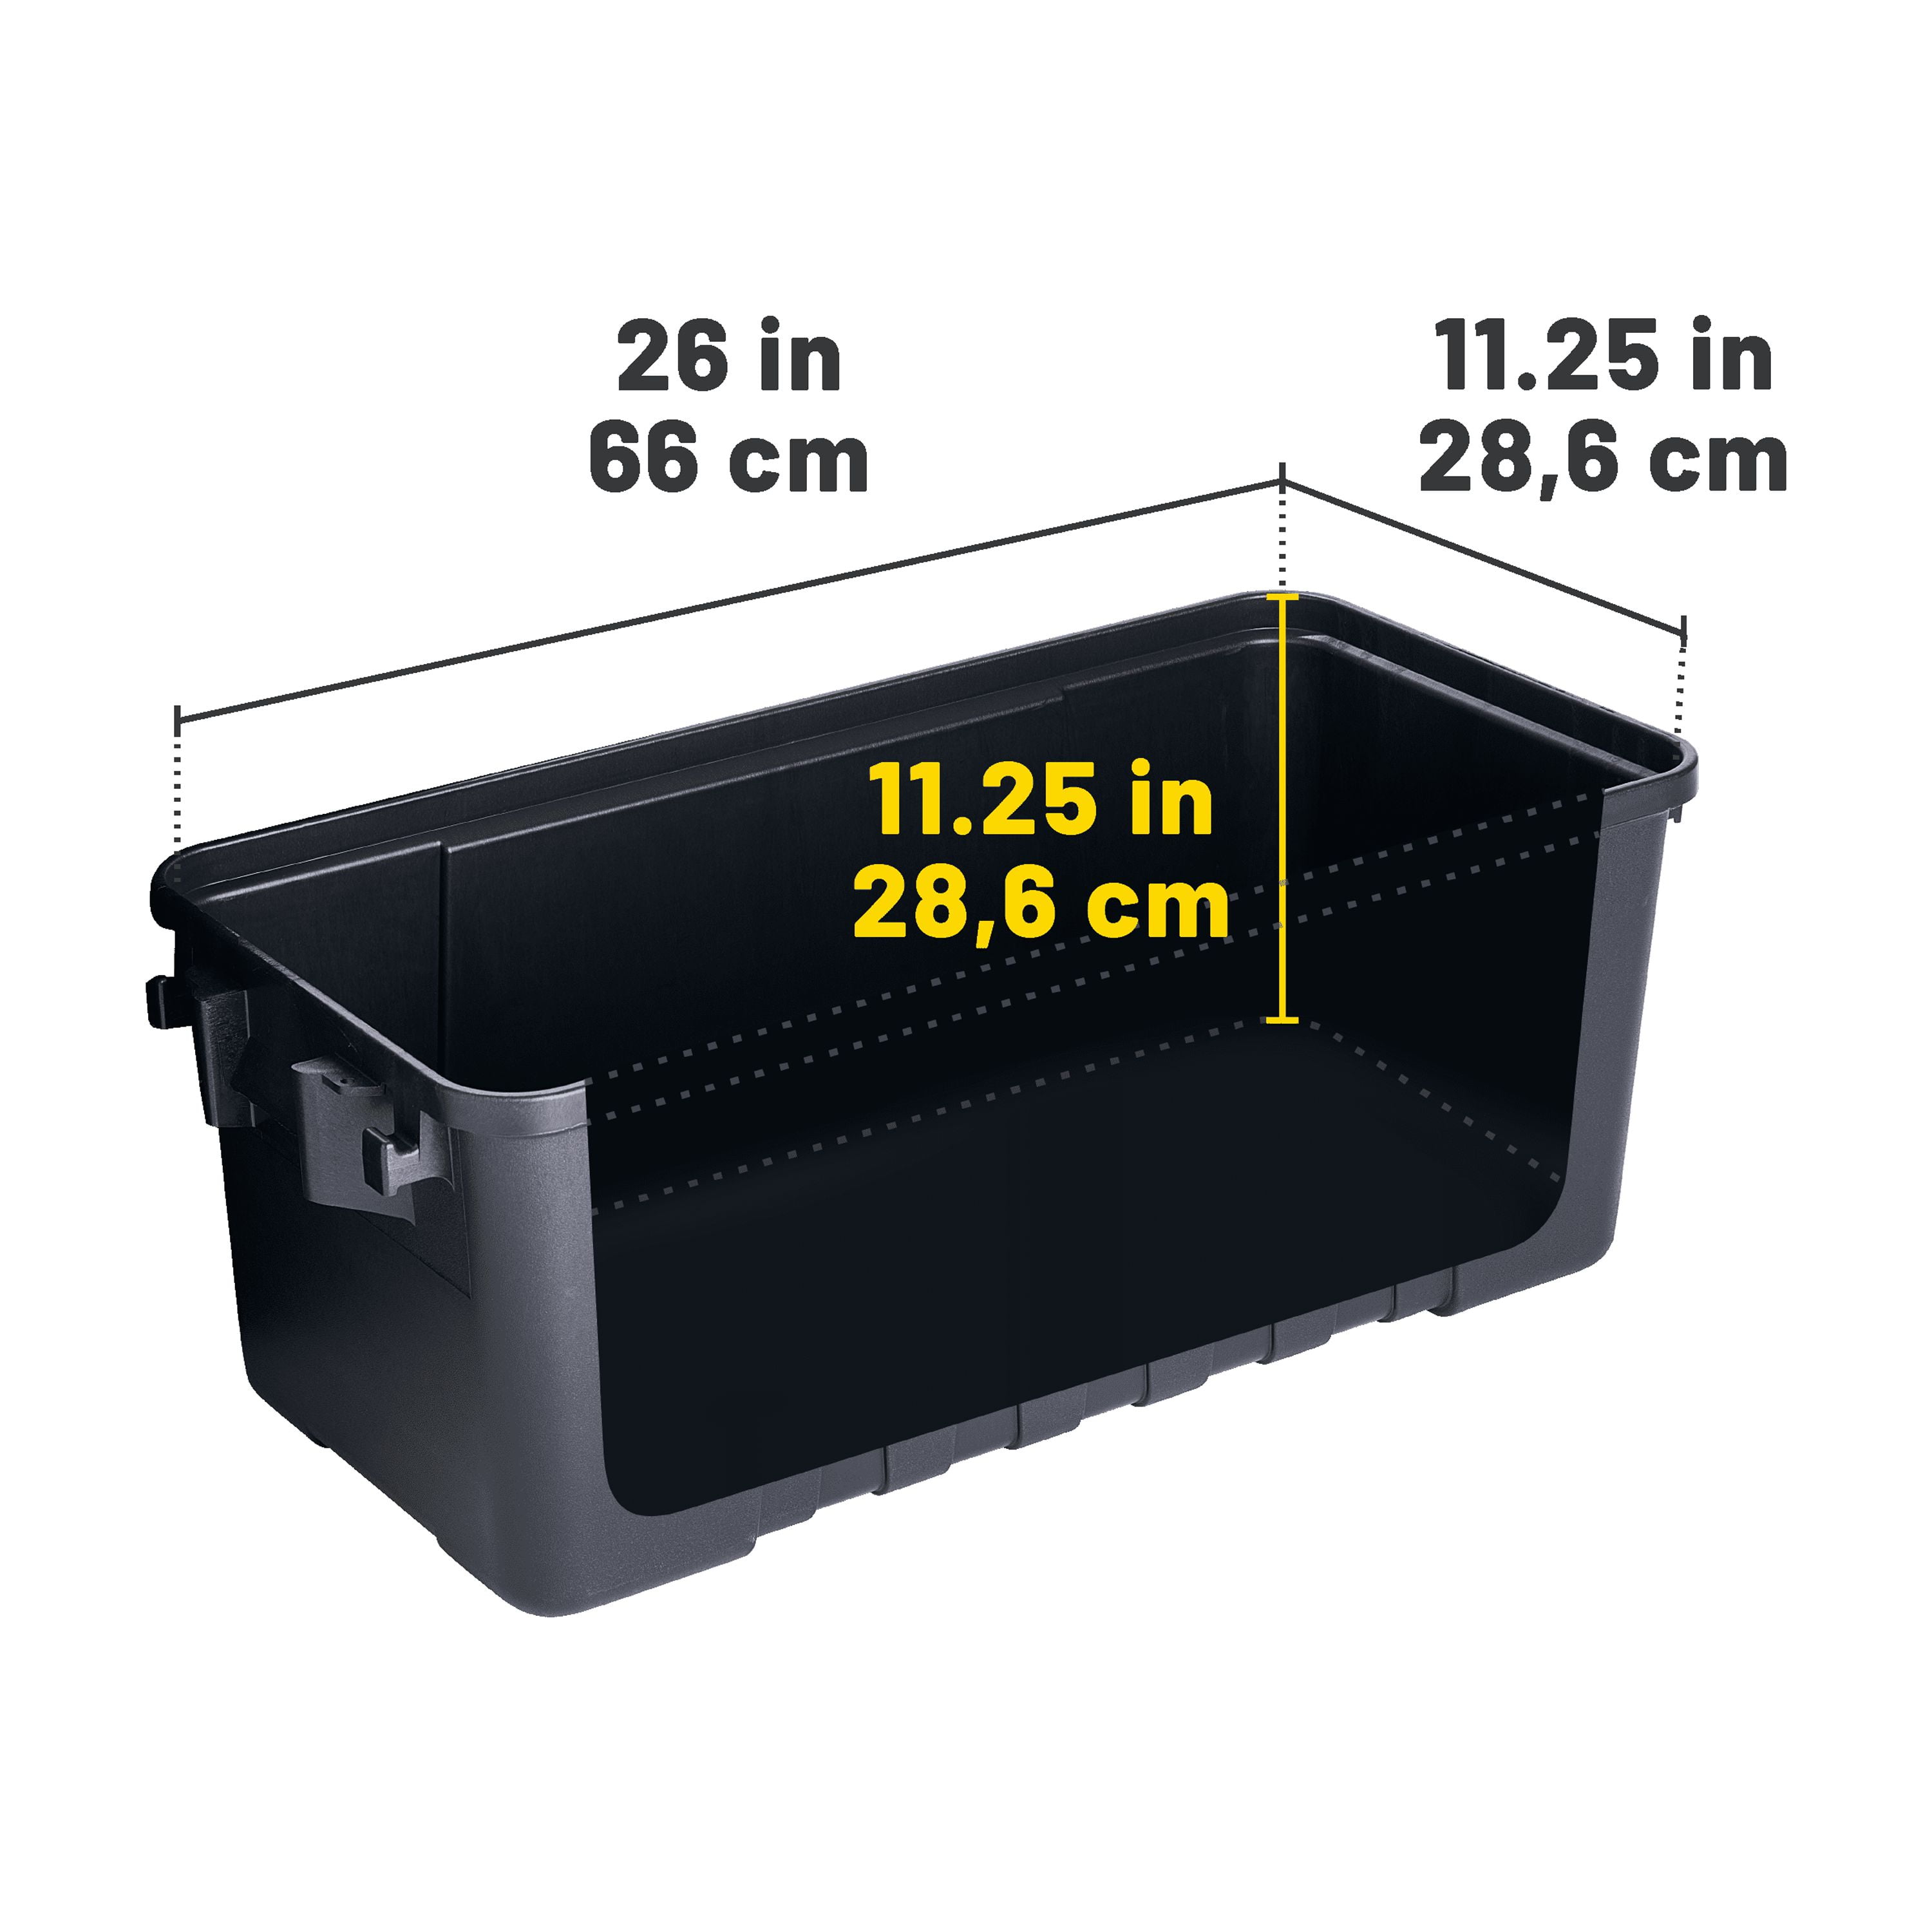 Plano Sportsman's Trunk, Black, 17-Gallon Lockable Storage Box